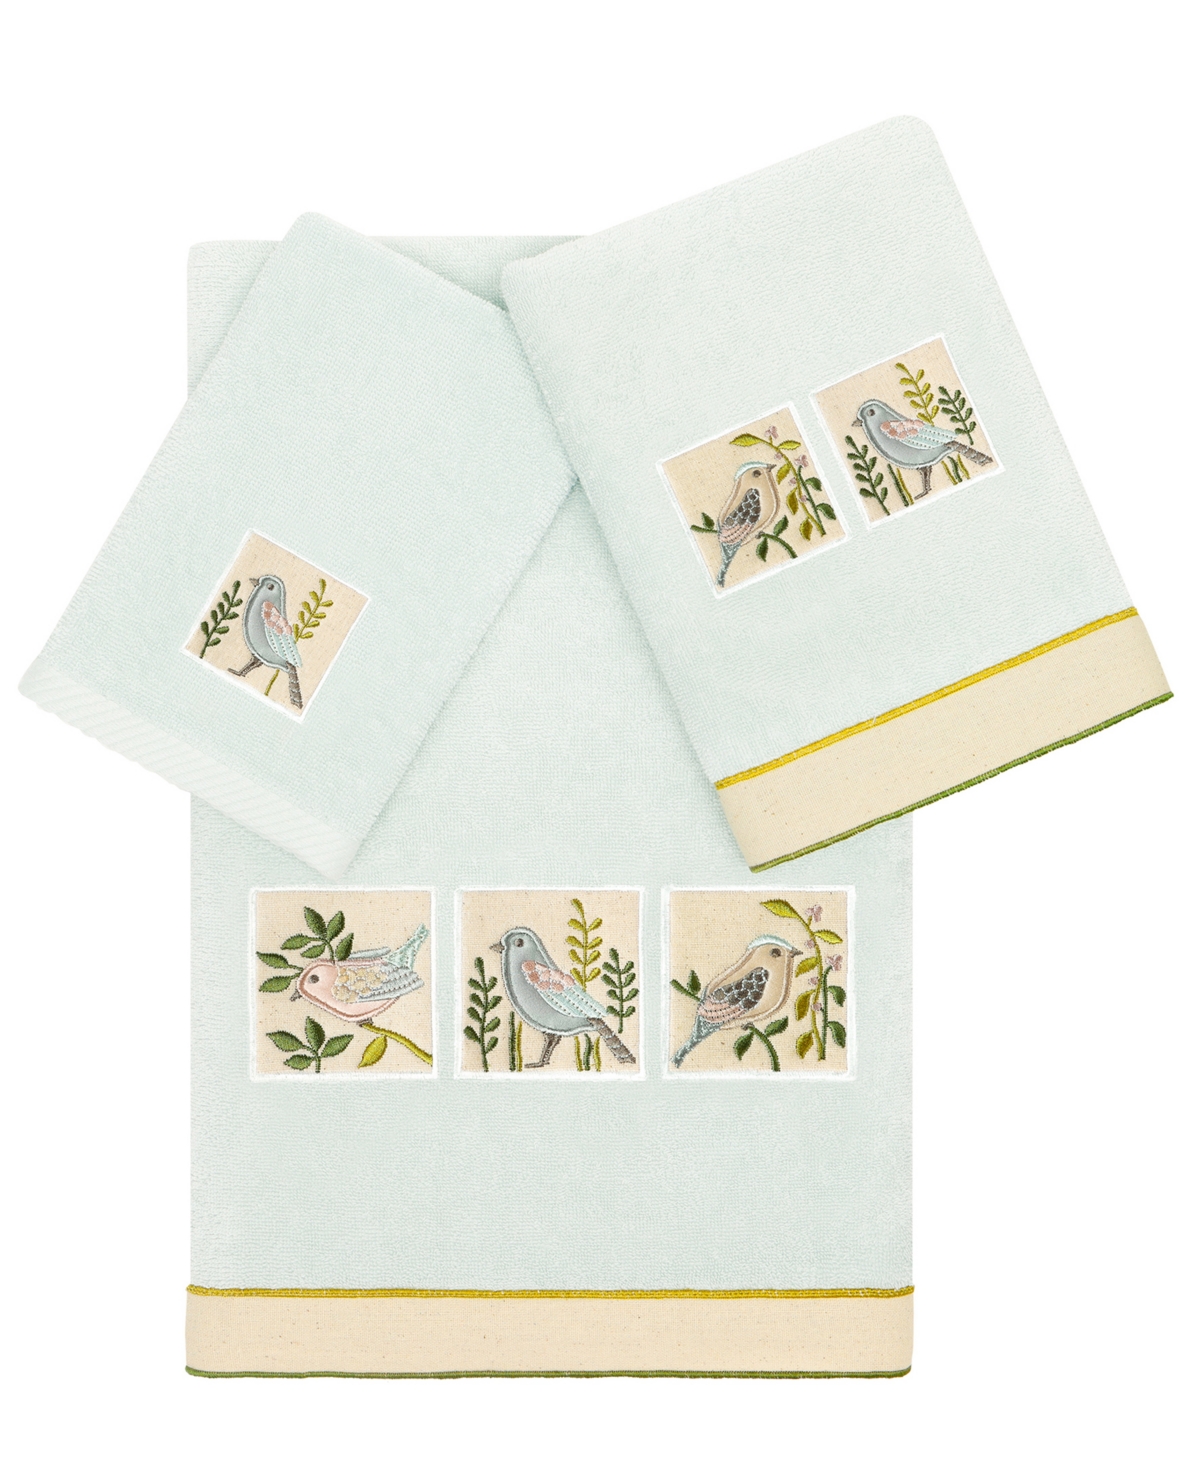 Linum Home Textiles Turkish Cotton Belinda Embellished Towel Set, 3 Piece In Aqua